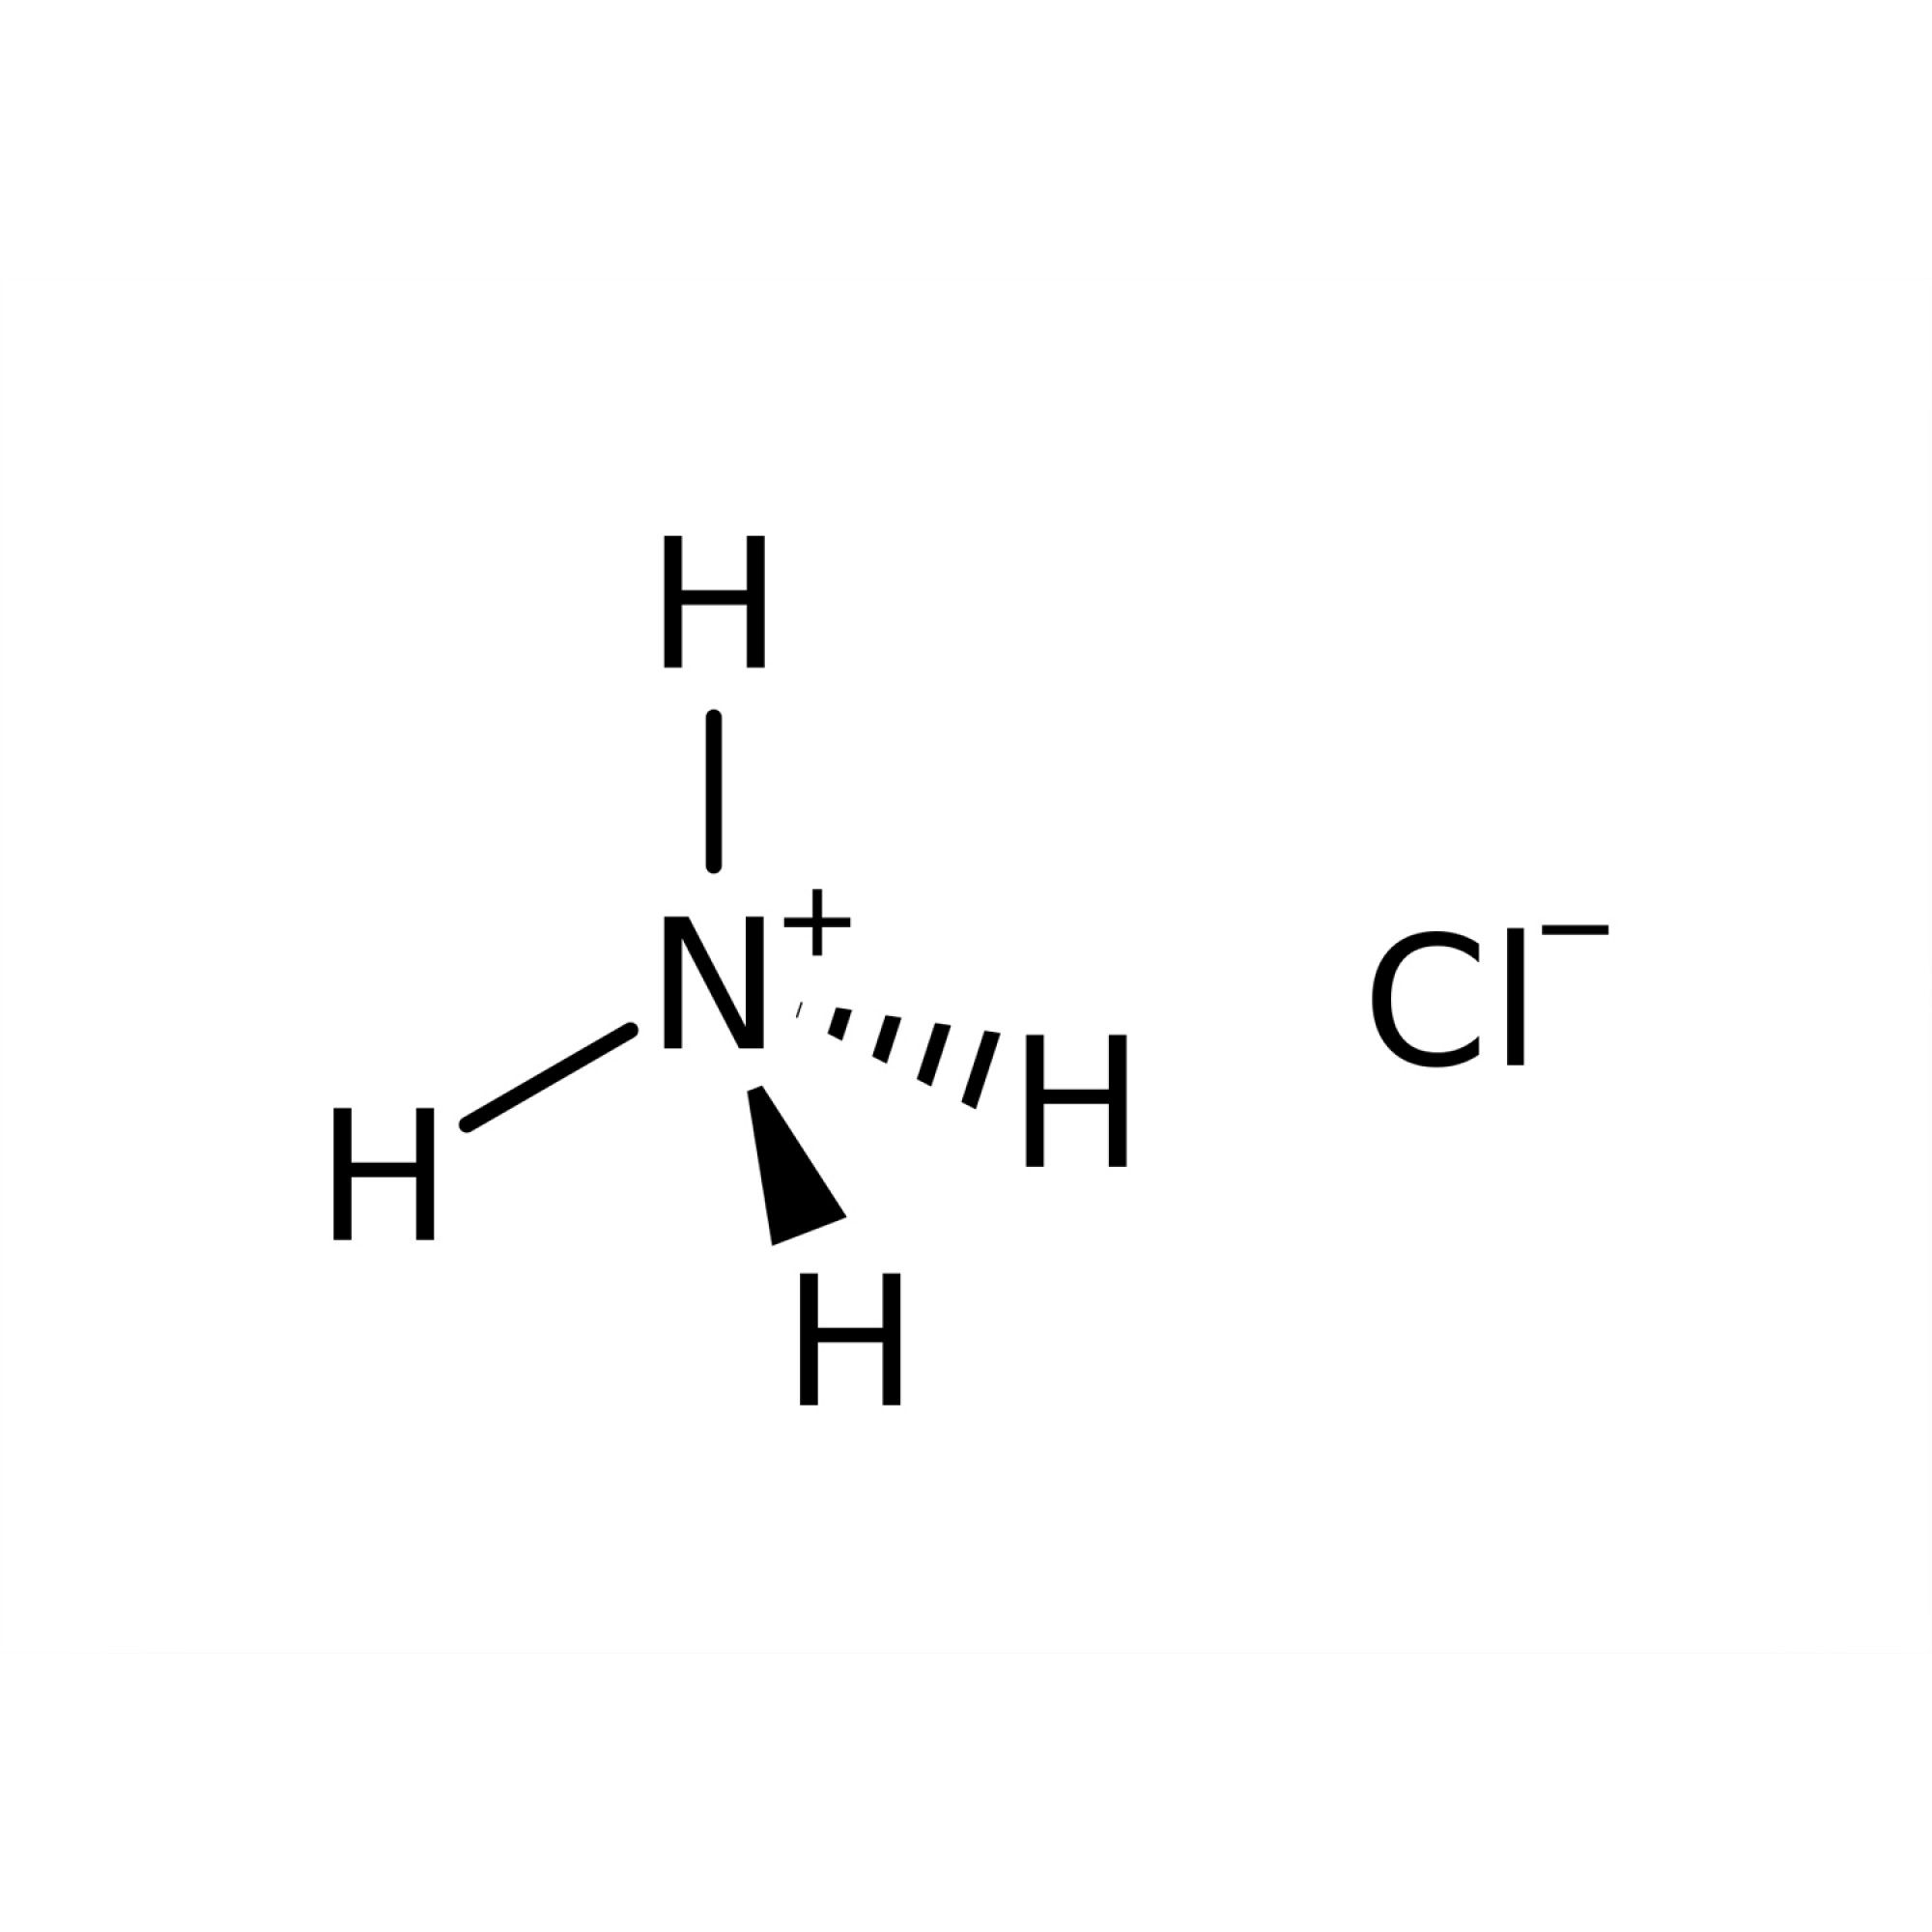 Хлорид аммония запах. Хлористый аммоний формула. Структурное строение хлорида аммония. Nh4cl структура.